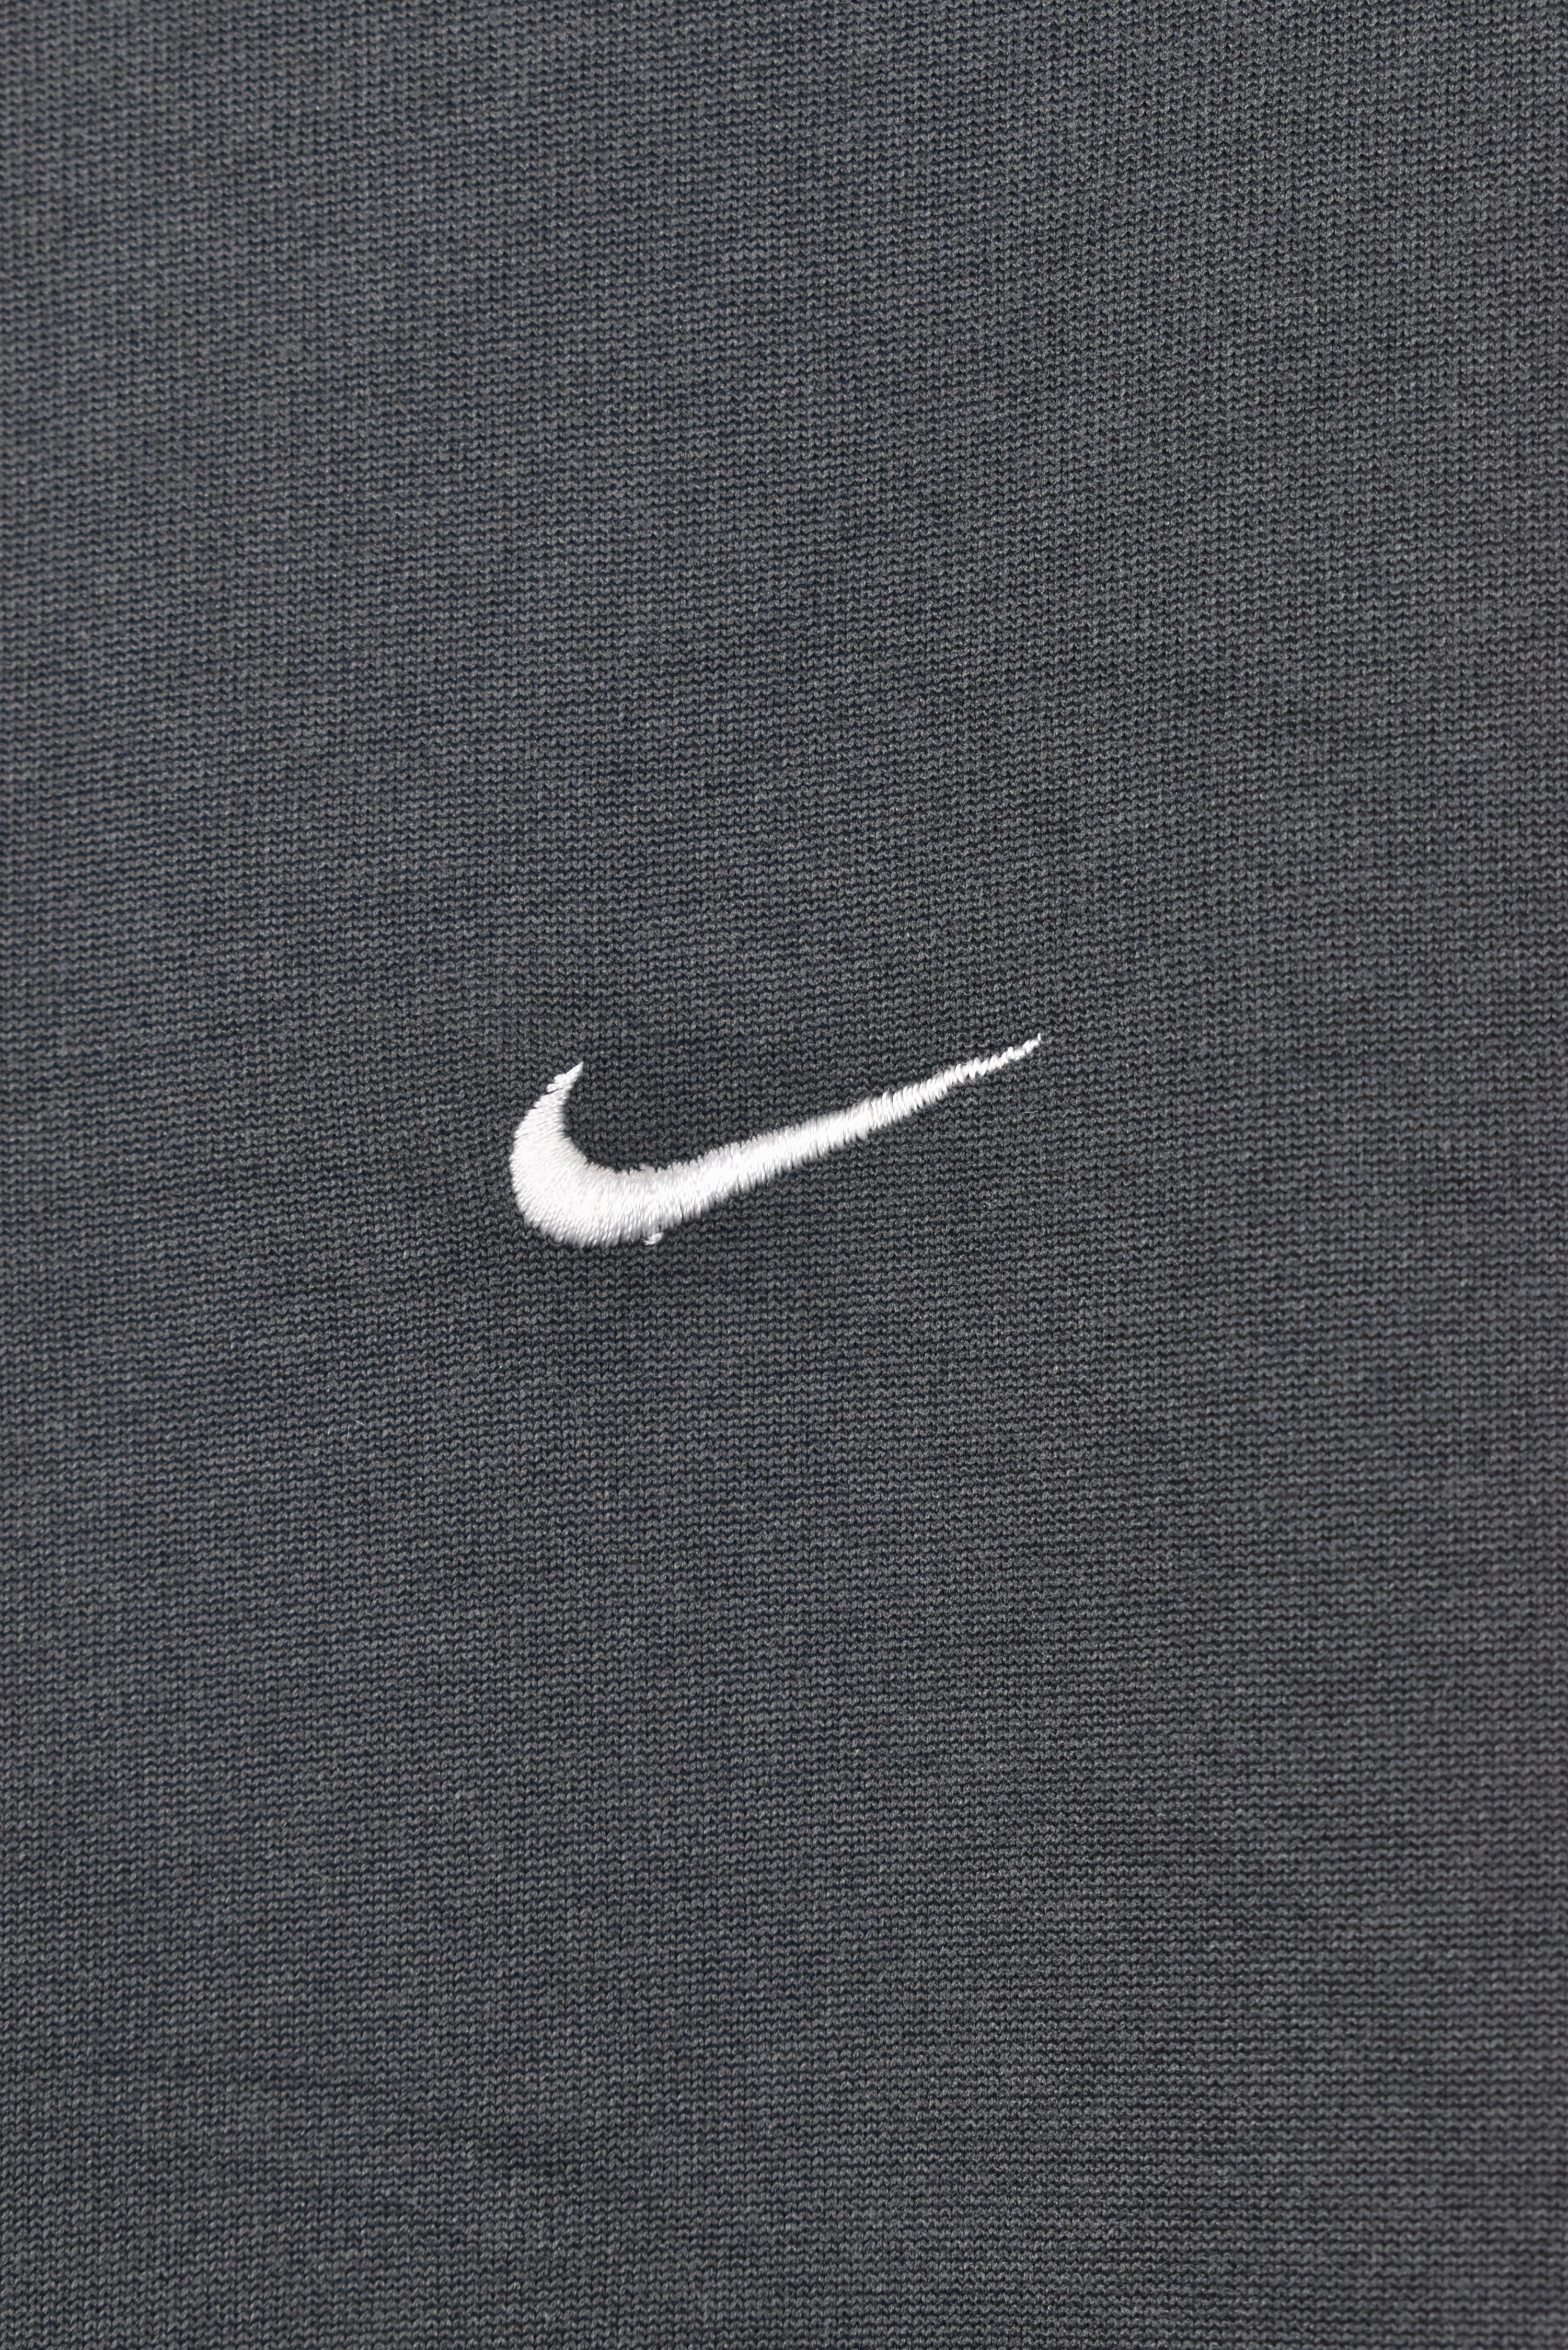 Vintage Nike shirt, grey athletic embroidered tee - AU L NIKE